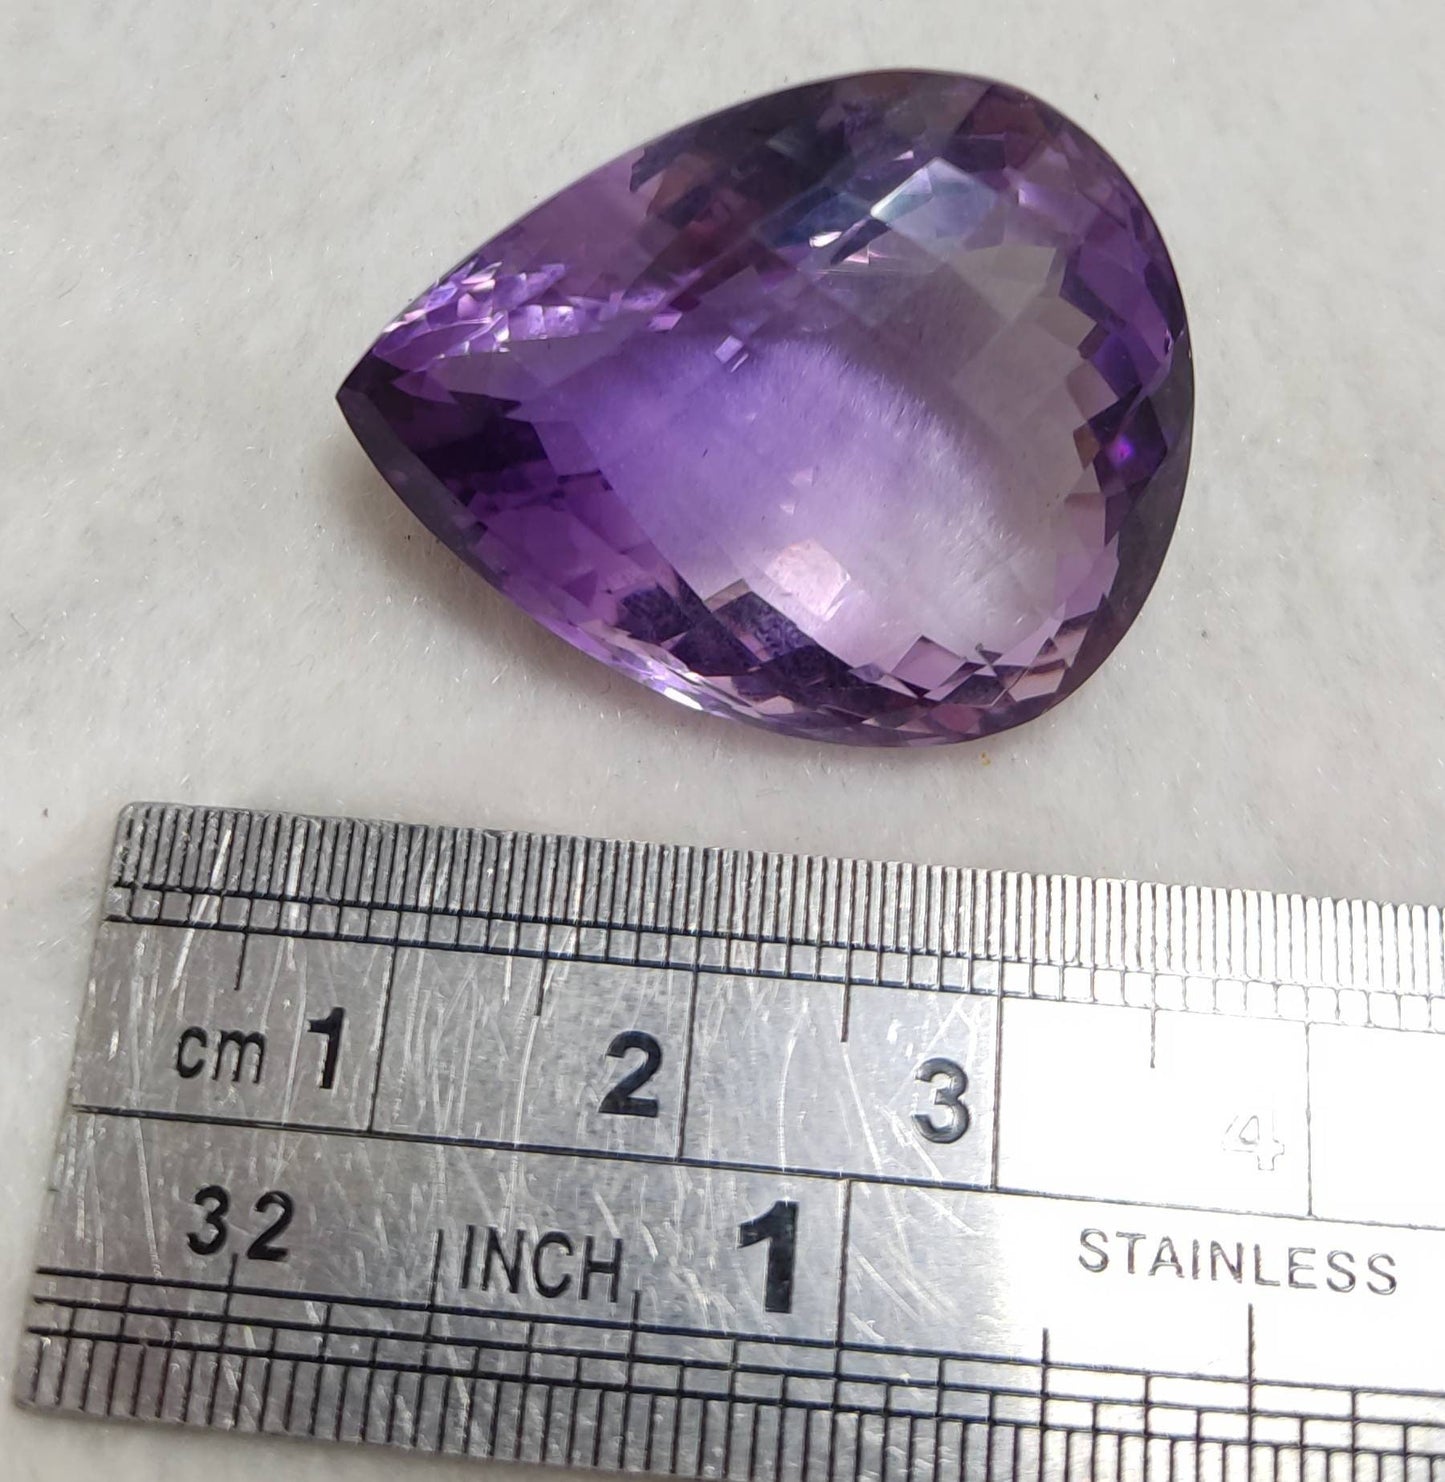 Tear drop cut faceted amethyst gemstone 64 carats